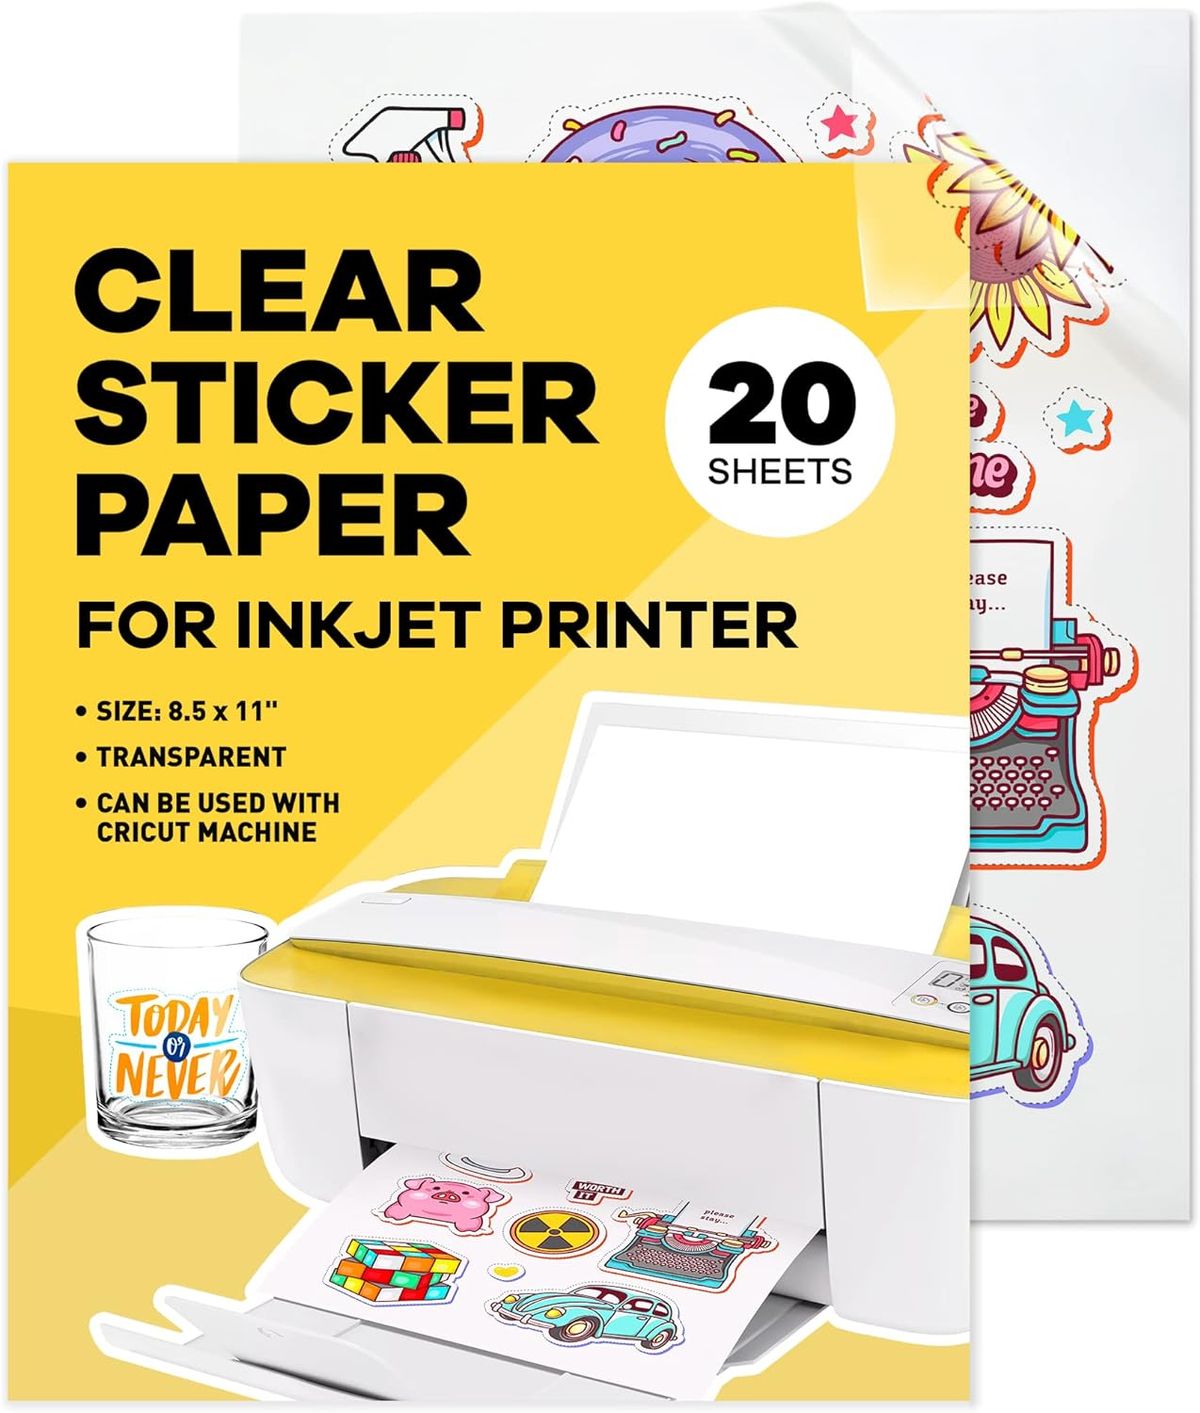 Clear Sticker Paper for Inkjet Printer 20 Sheets 